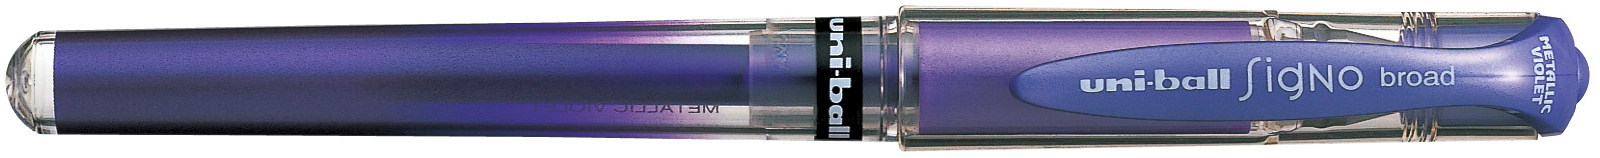 UNI-BALL Signo Broad 1mm UM-153MET violet-métalic